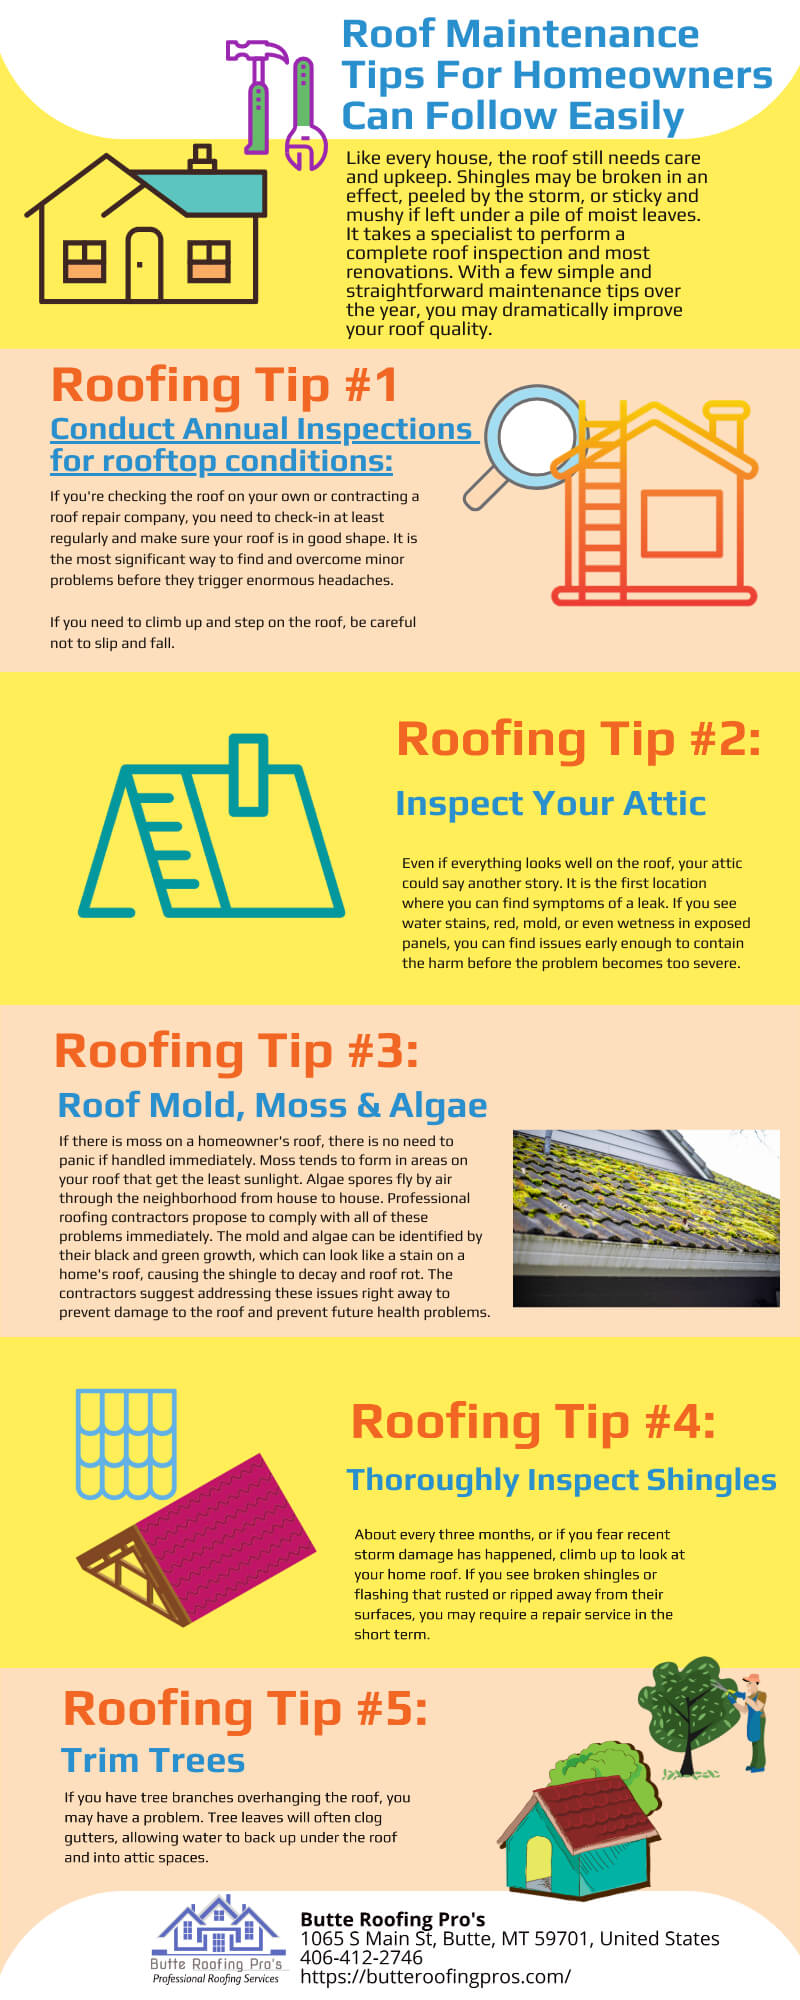 https://butteroofingpros.com/wp-content/uploads/2020/09/Roof-Maintenance-Tips-Infographic.jpeg